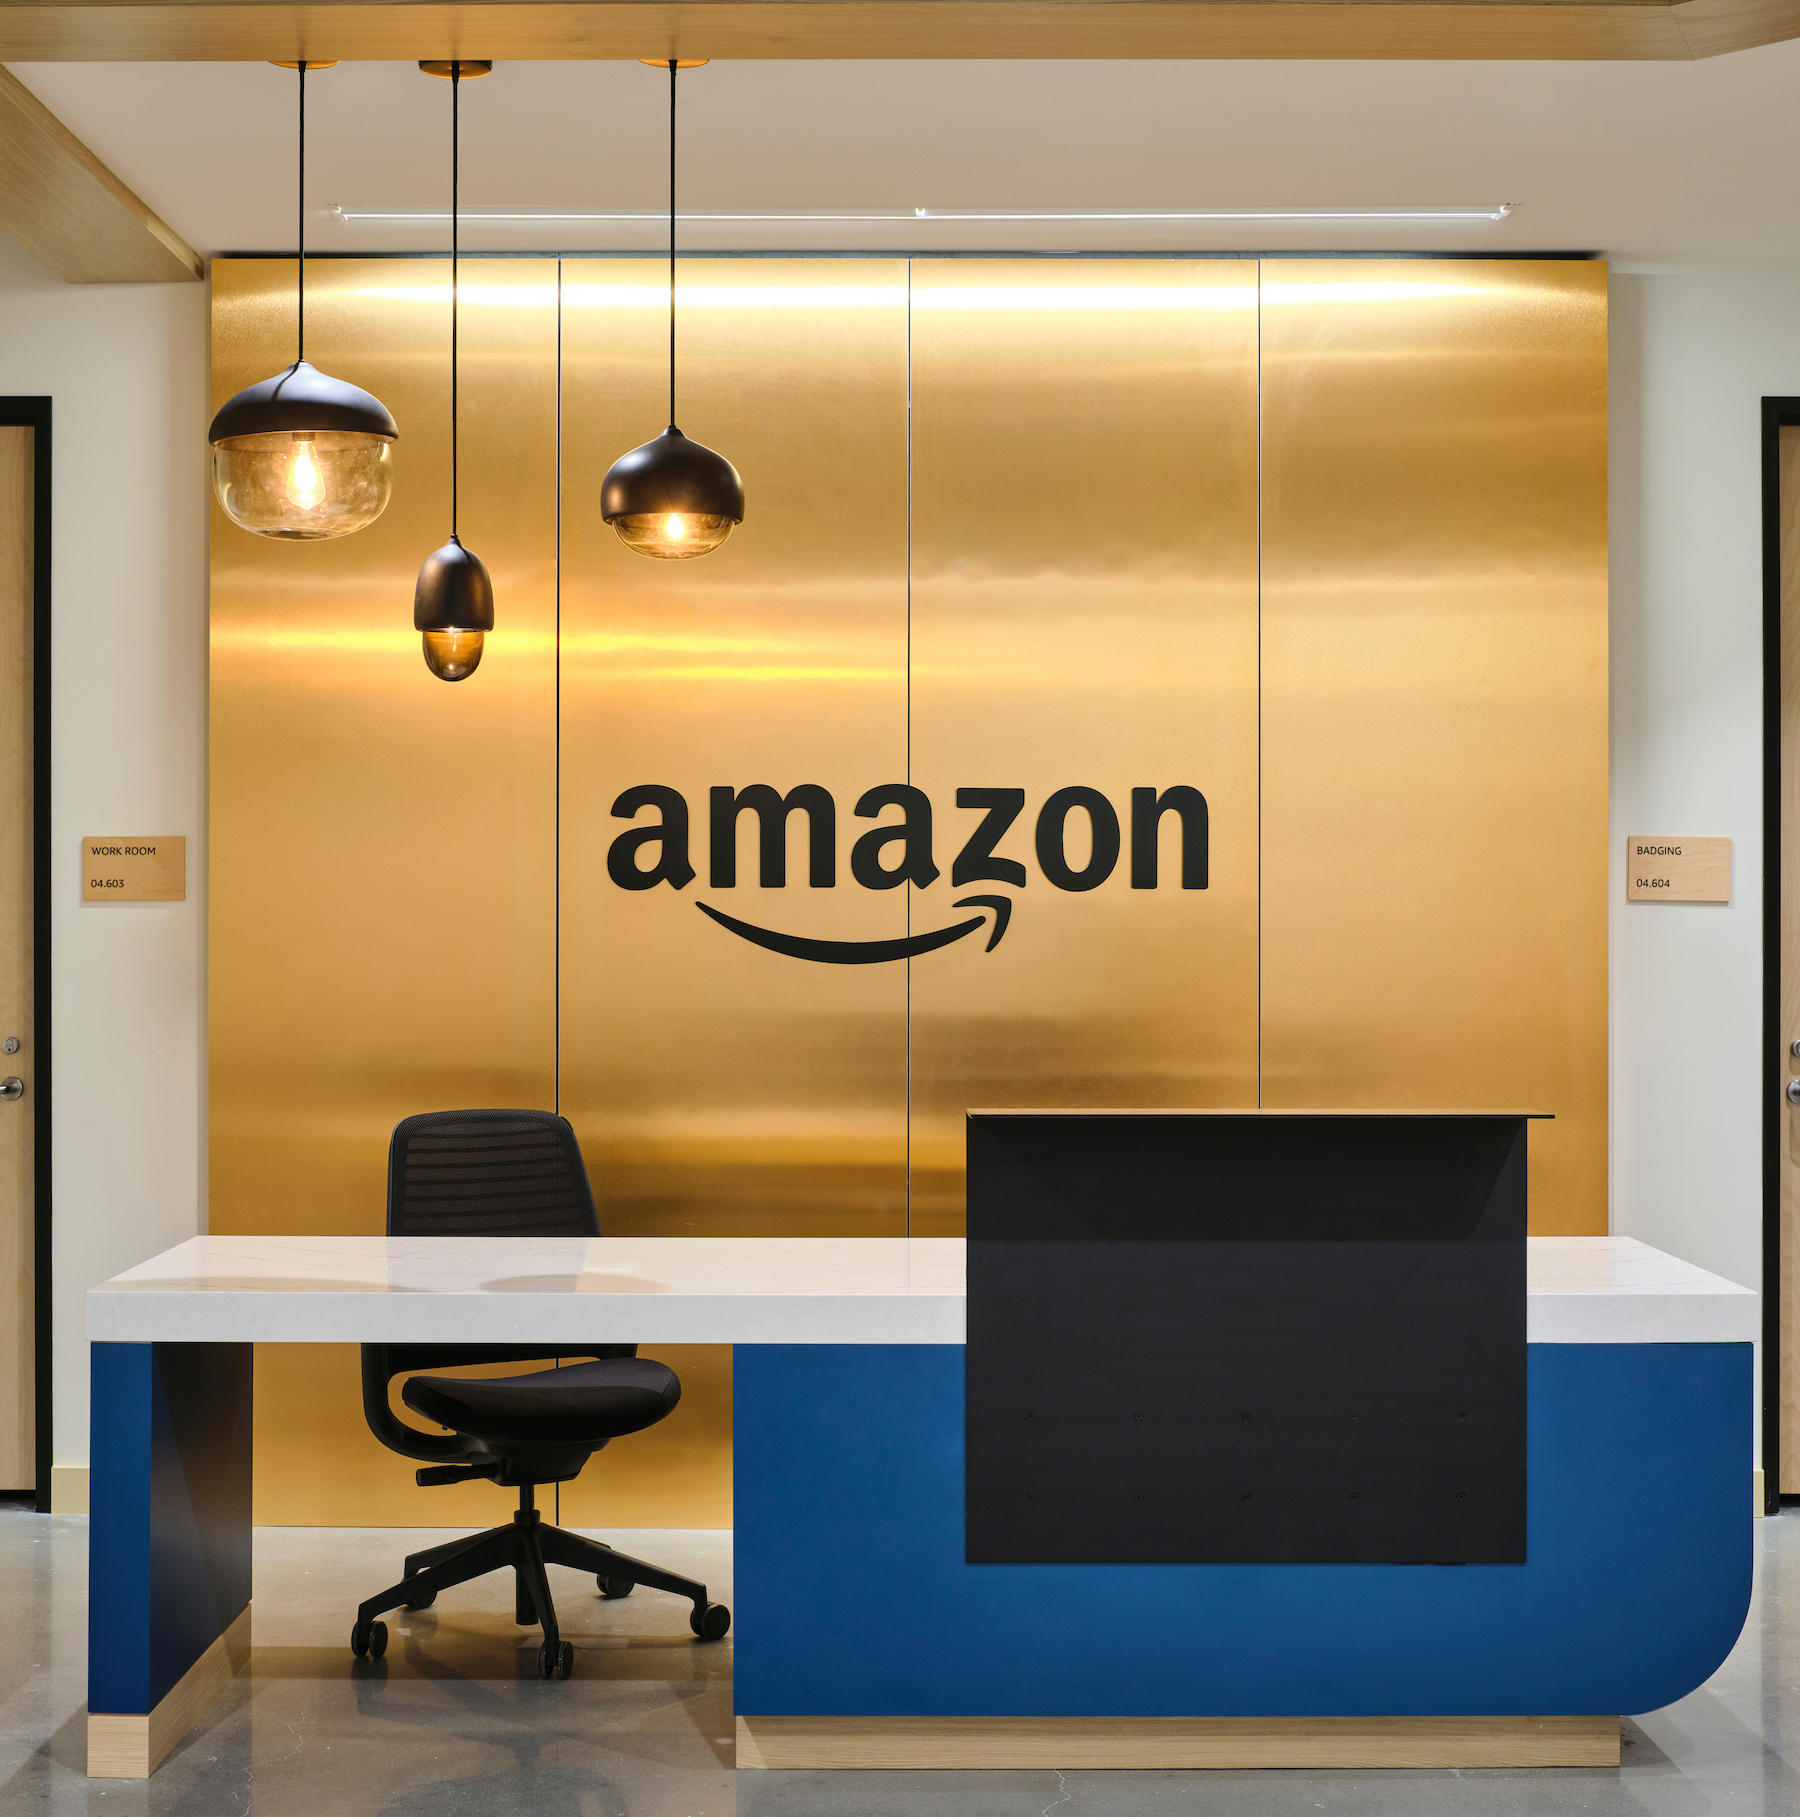 Amazon logo on wall behind desk